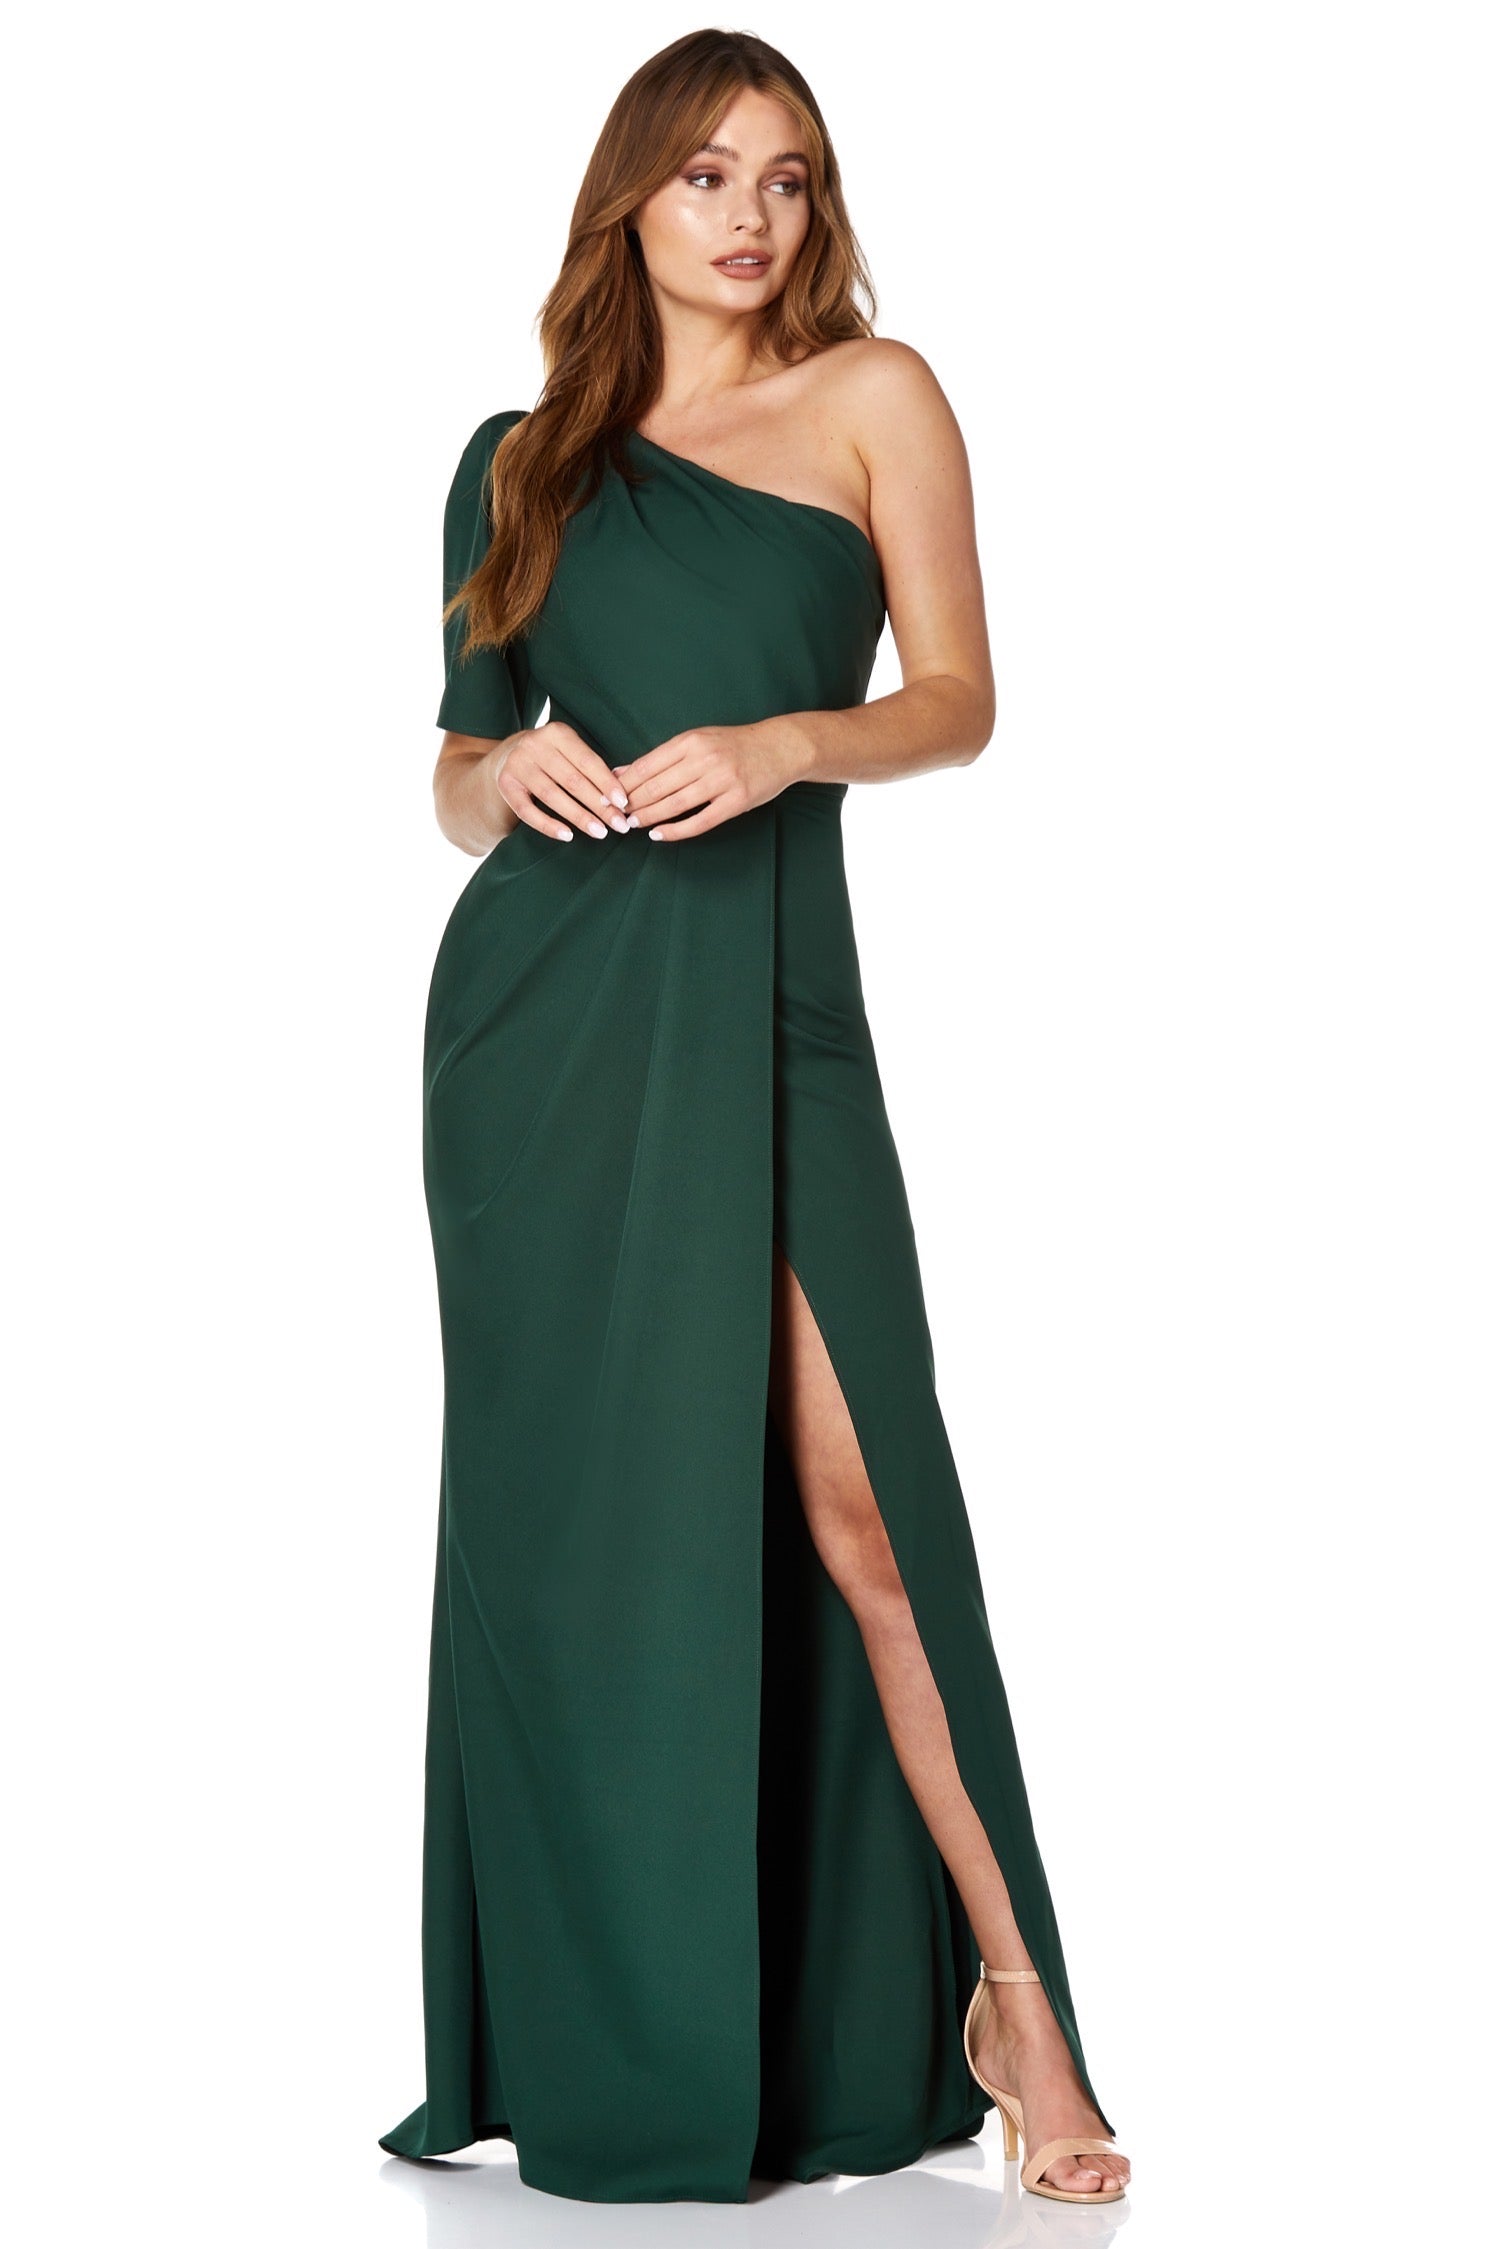 Gianna One Shoulder Sleeve Maxi Dress with Thigh Split, UK 10 / US 6 / EU 38 / Dark Green